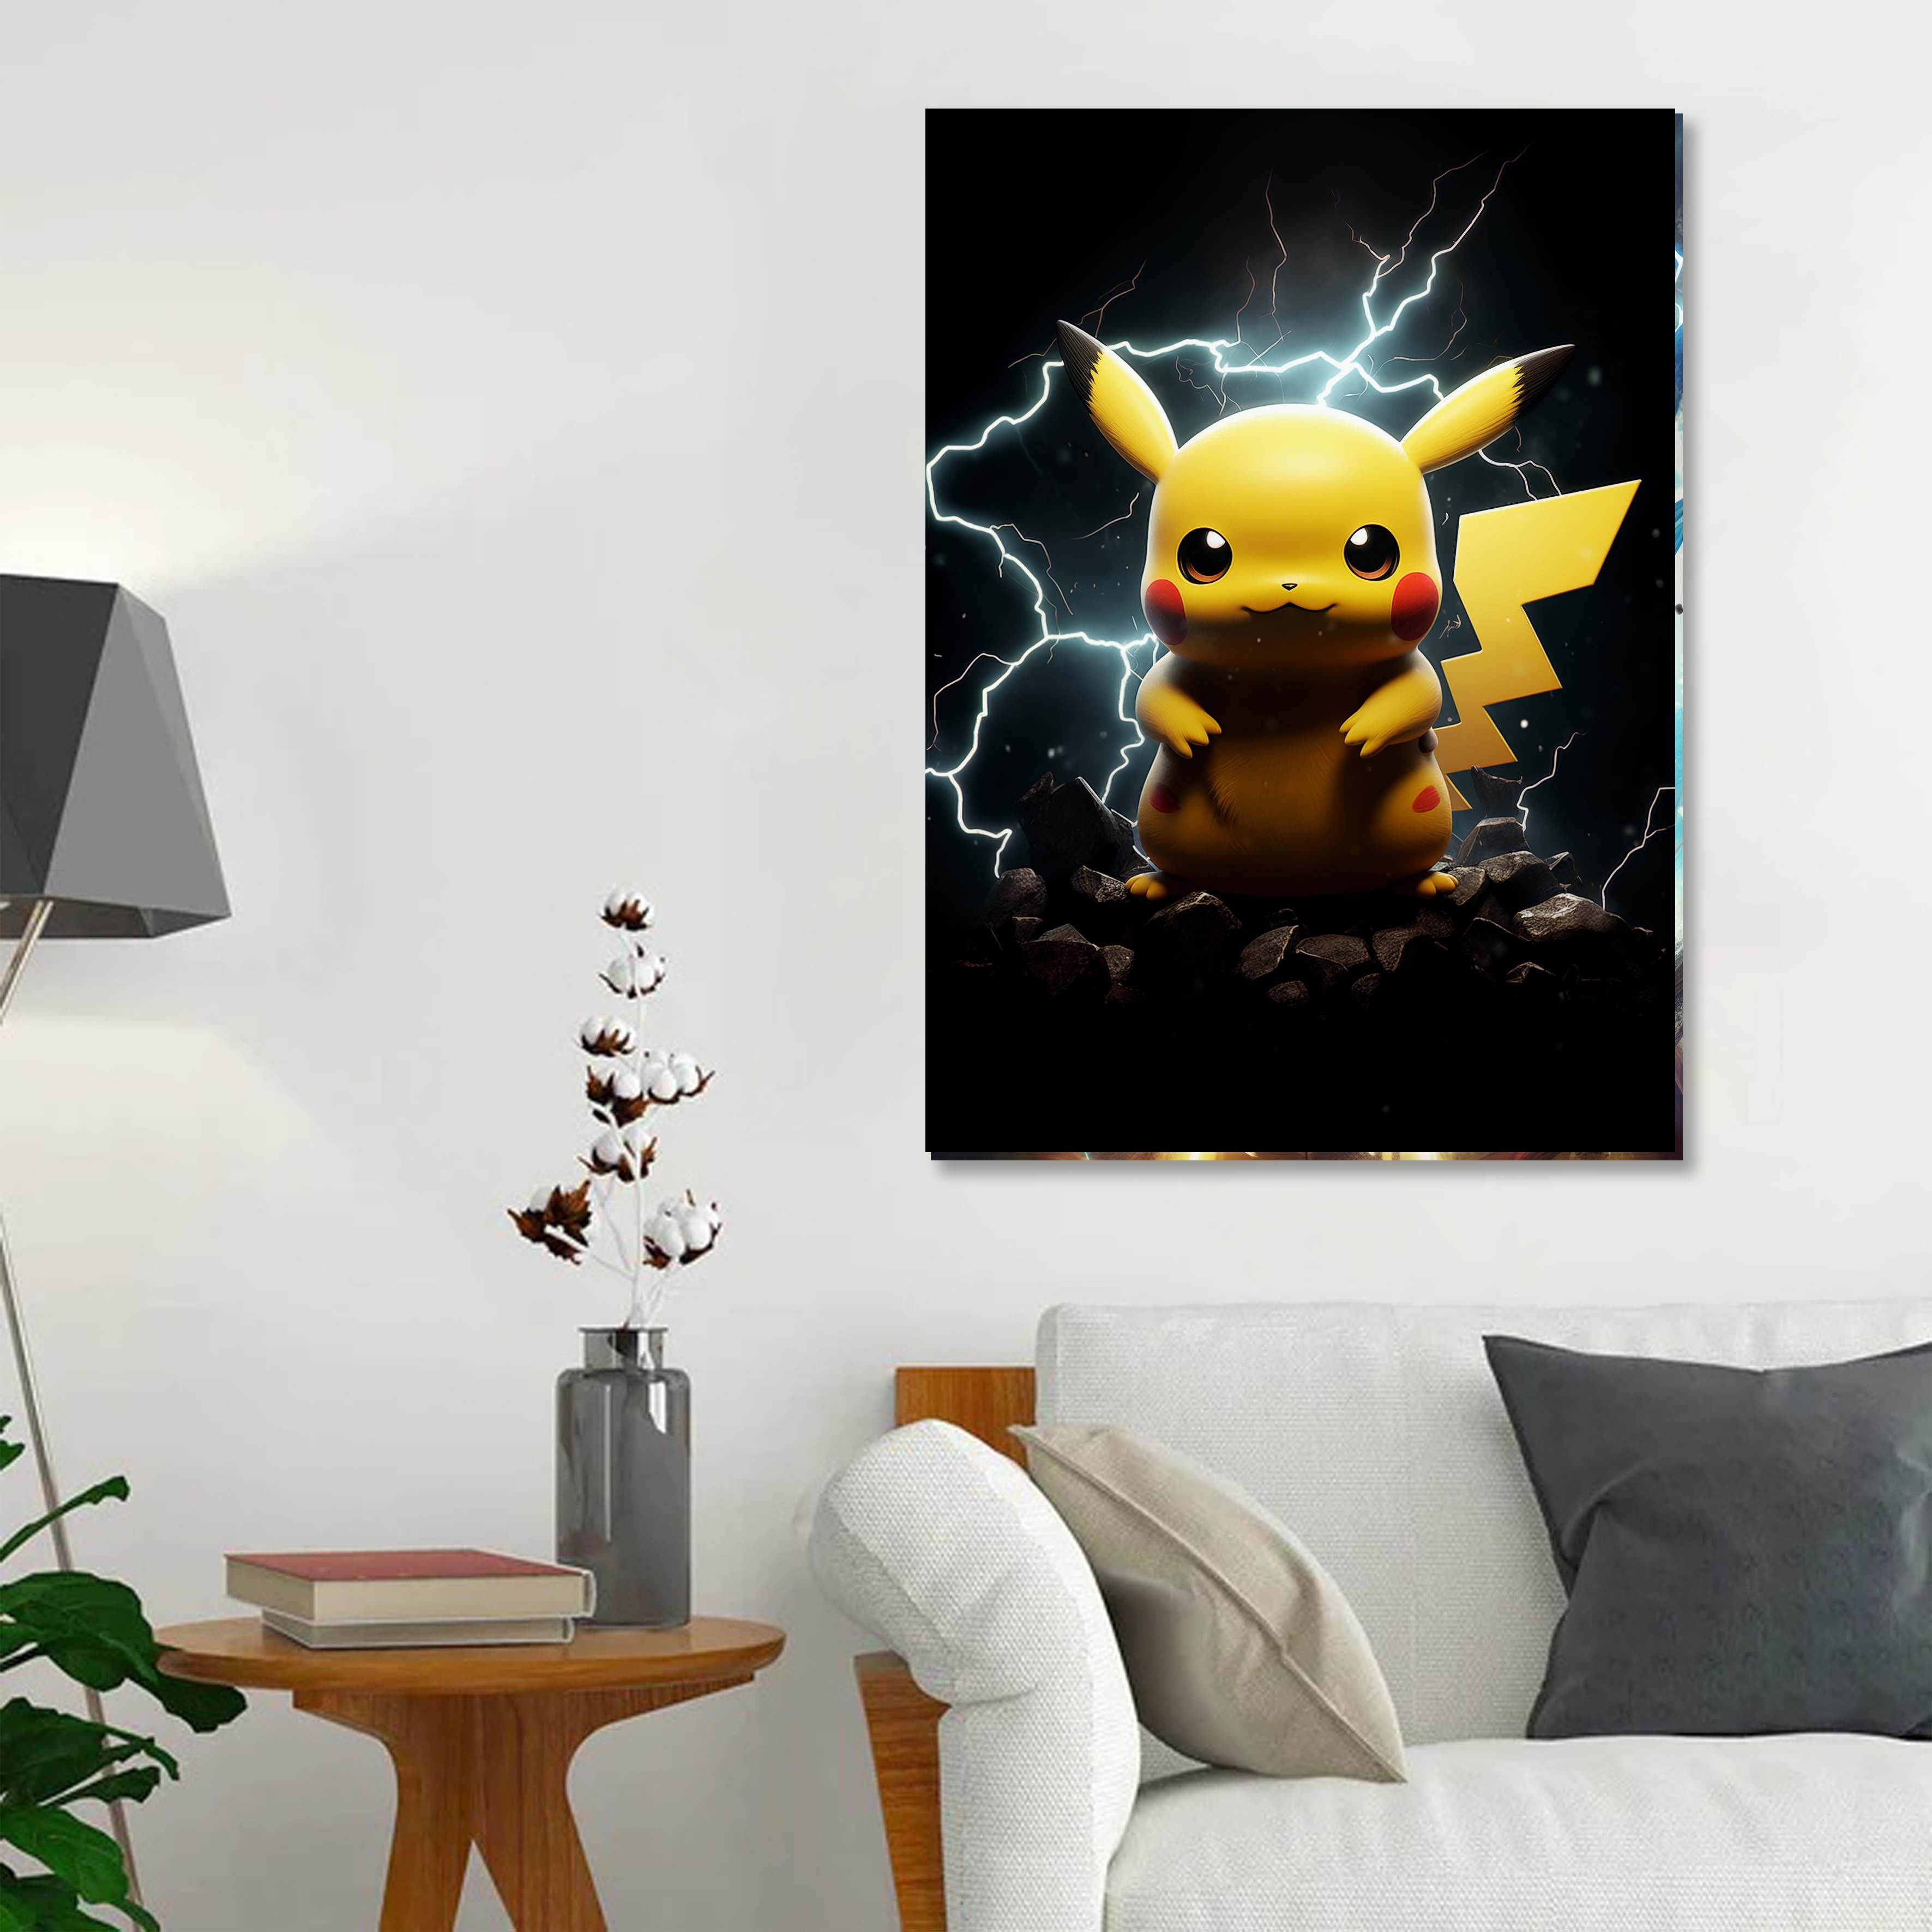 Pikachu-designed by @Fluency Room